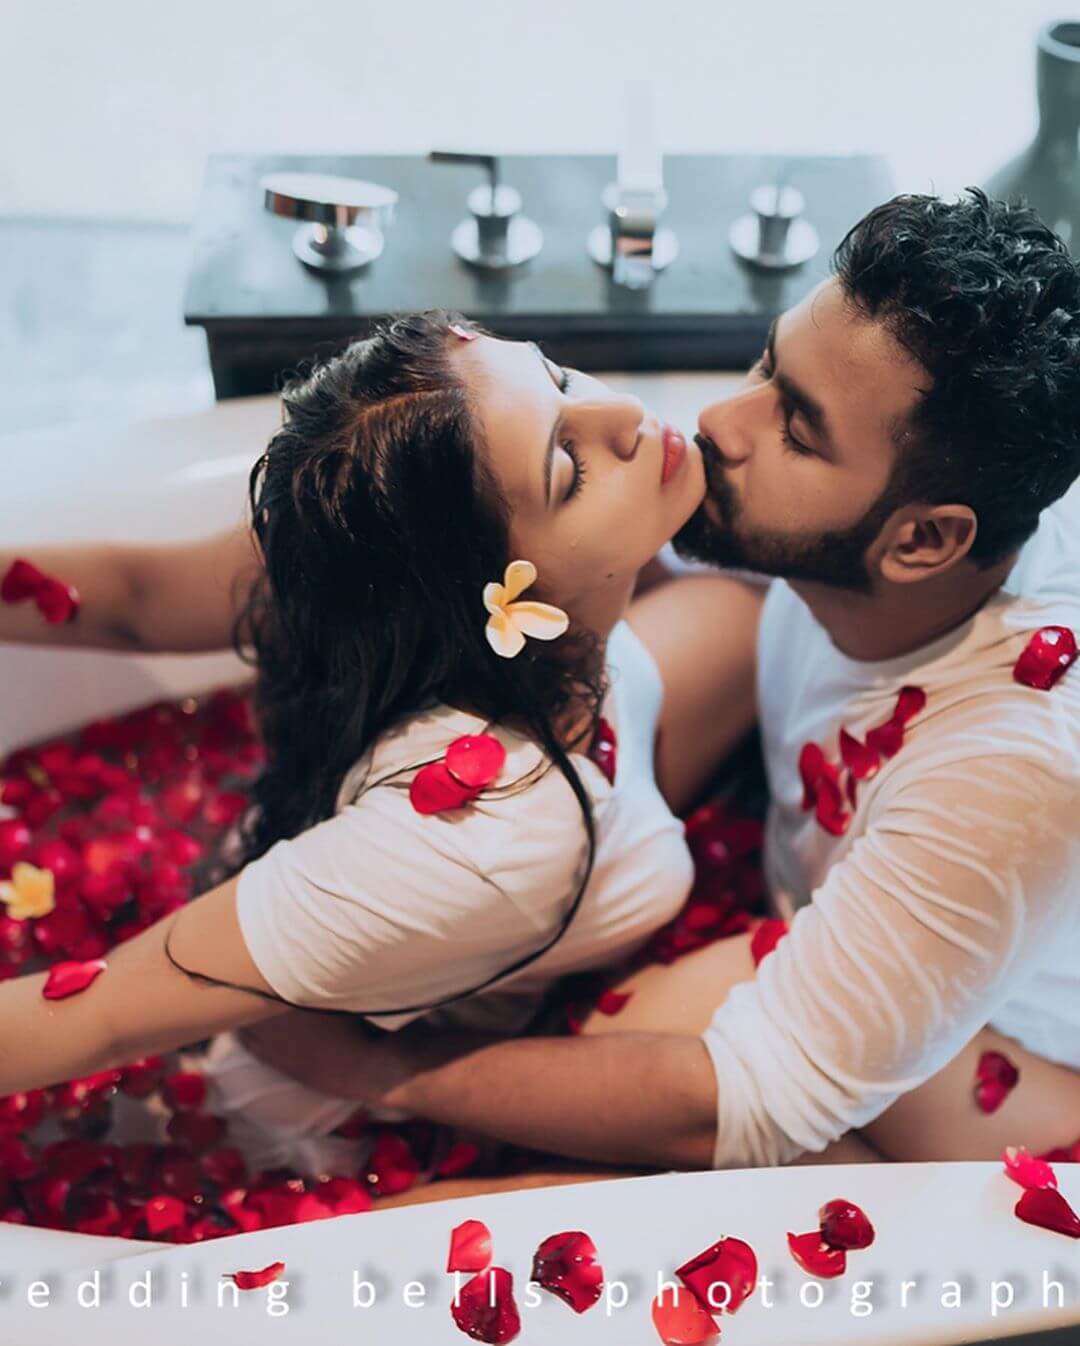 This pre-wedding bathtub photoshoot is setting the internet on fire